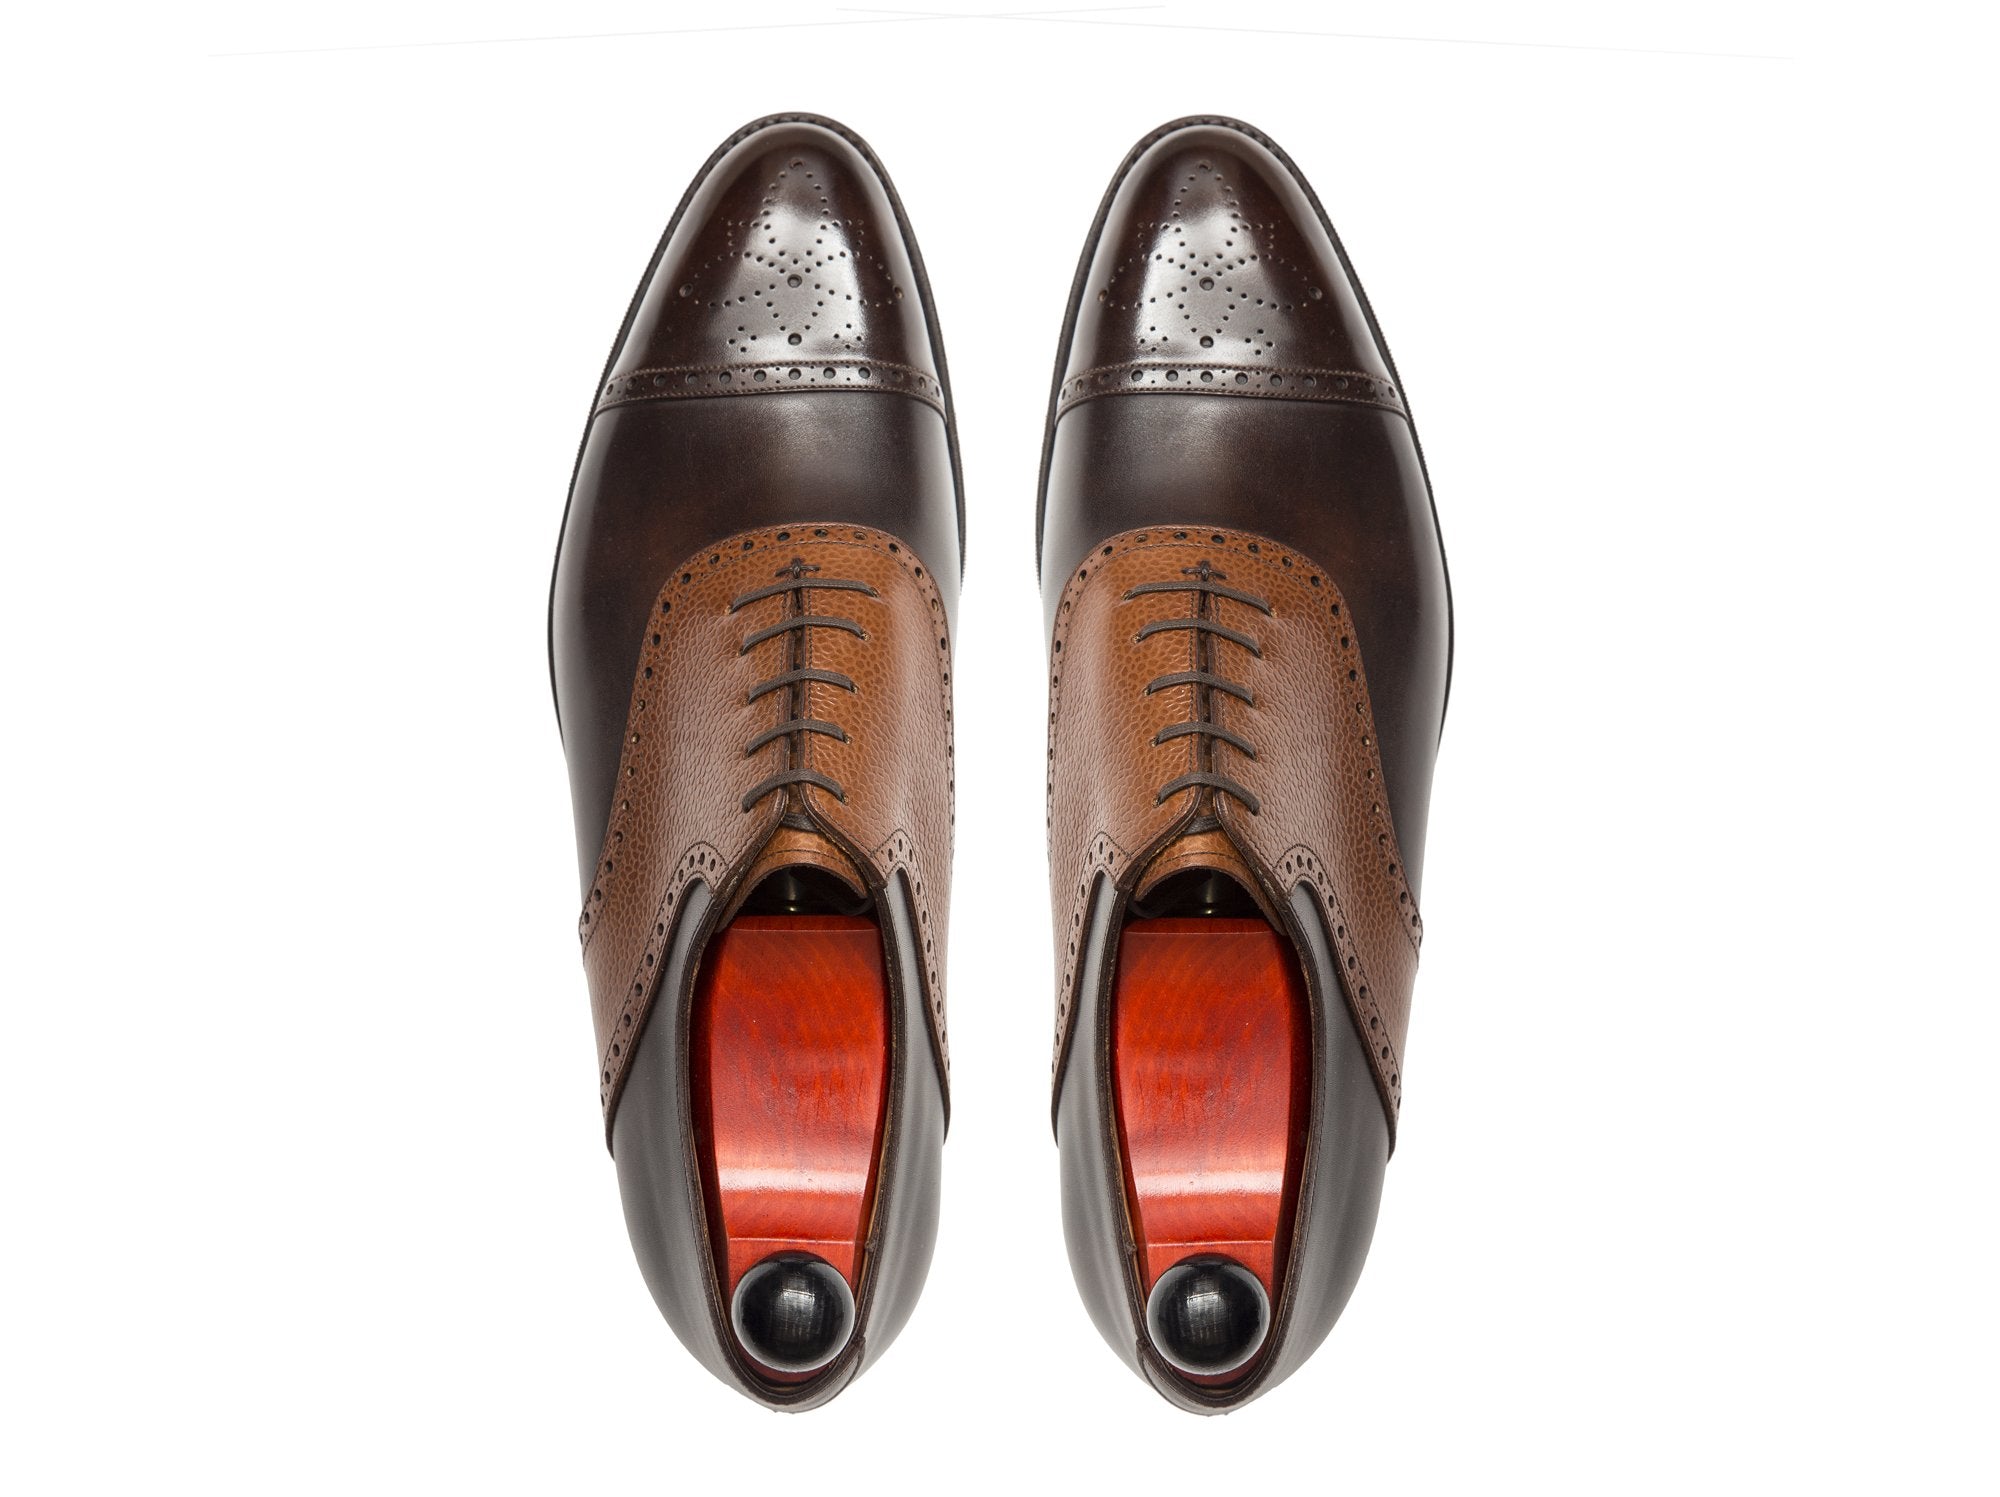 J.FitzPatrick Footwear - Burien - Dark Brown Museum Calf / Tan Soft Grain - TMG Last - City Rubber Sole